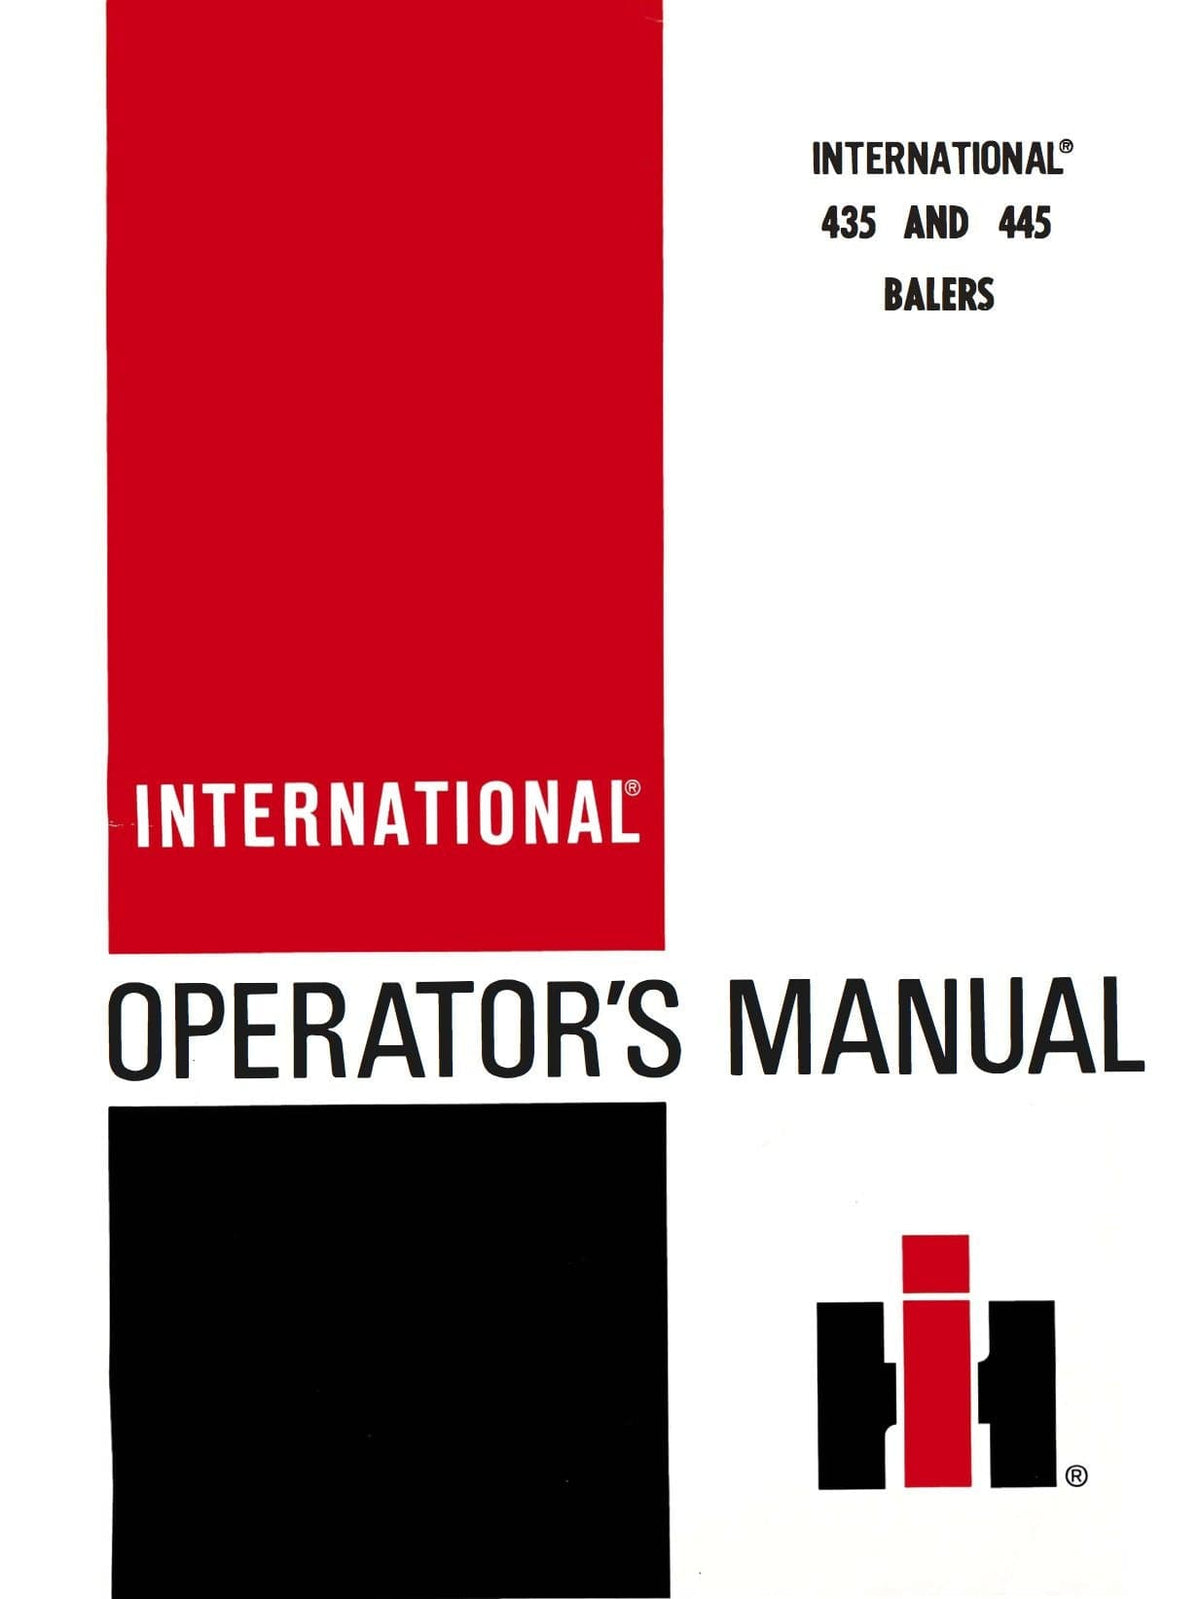 International 435 and 445 Balers Operator's Manual